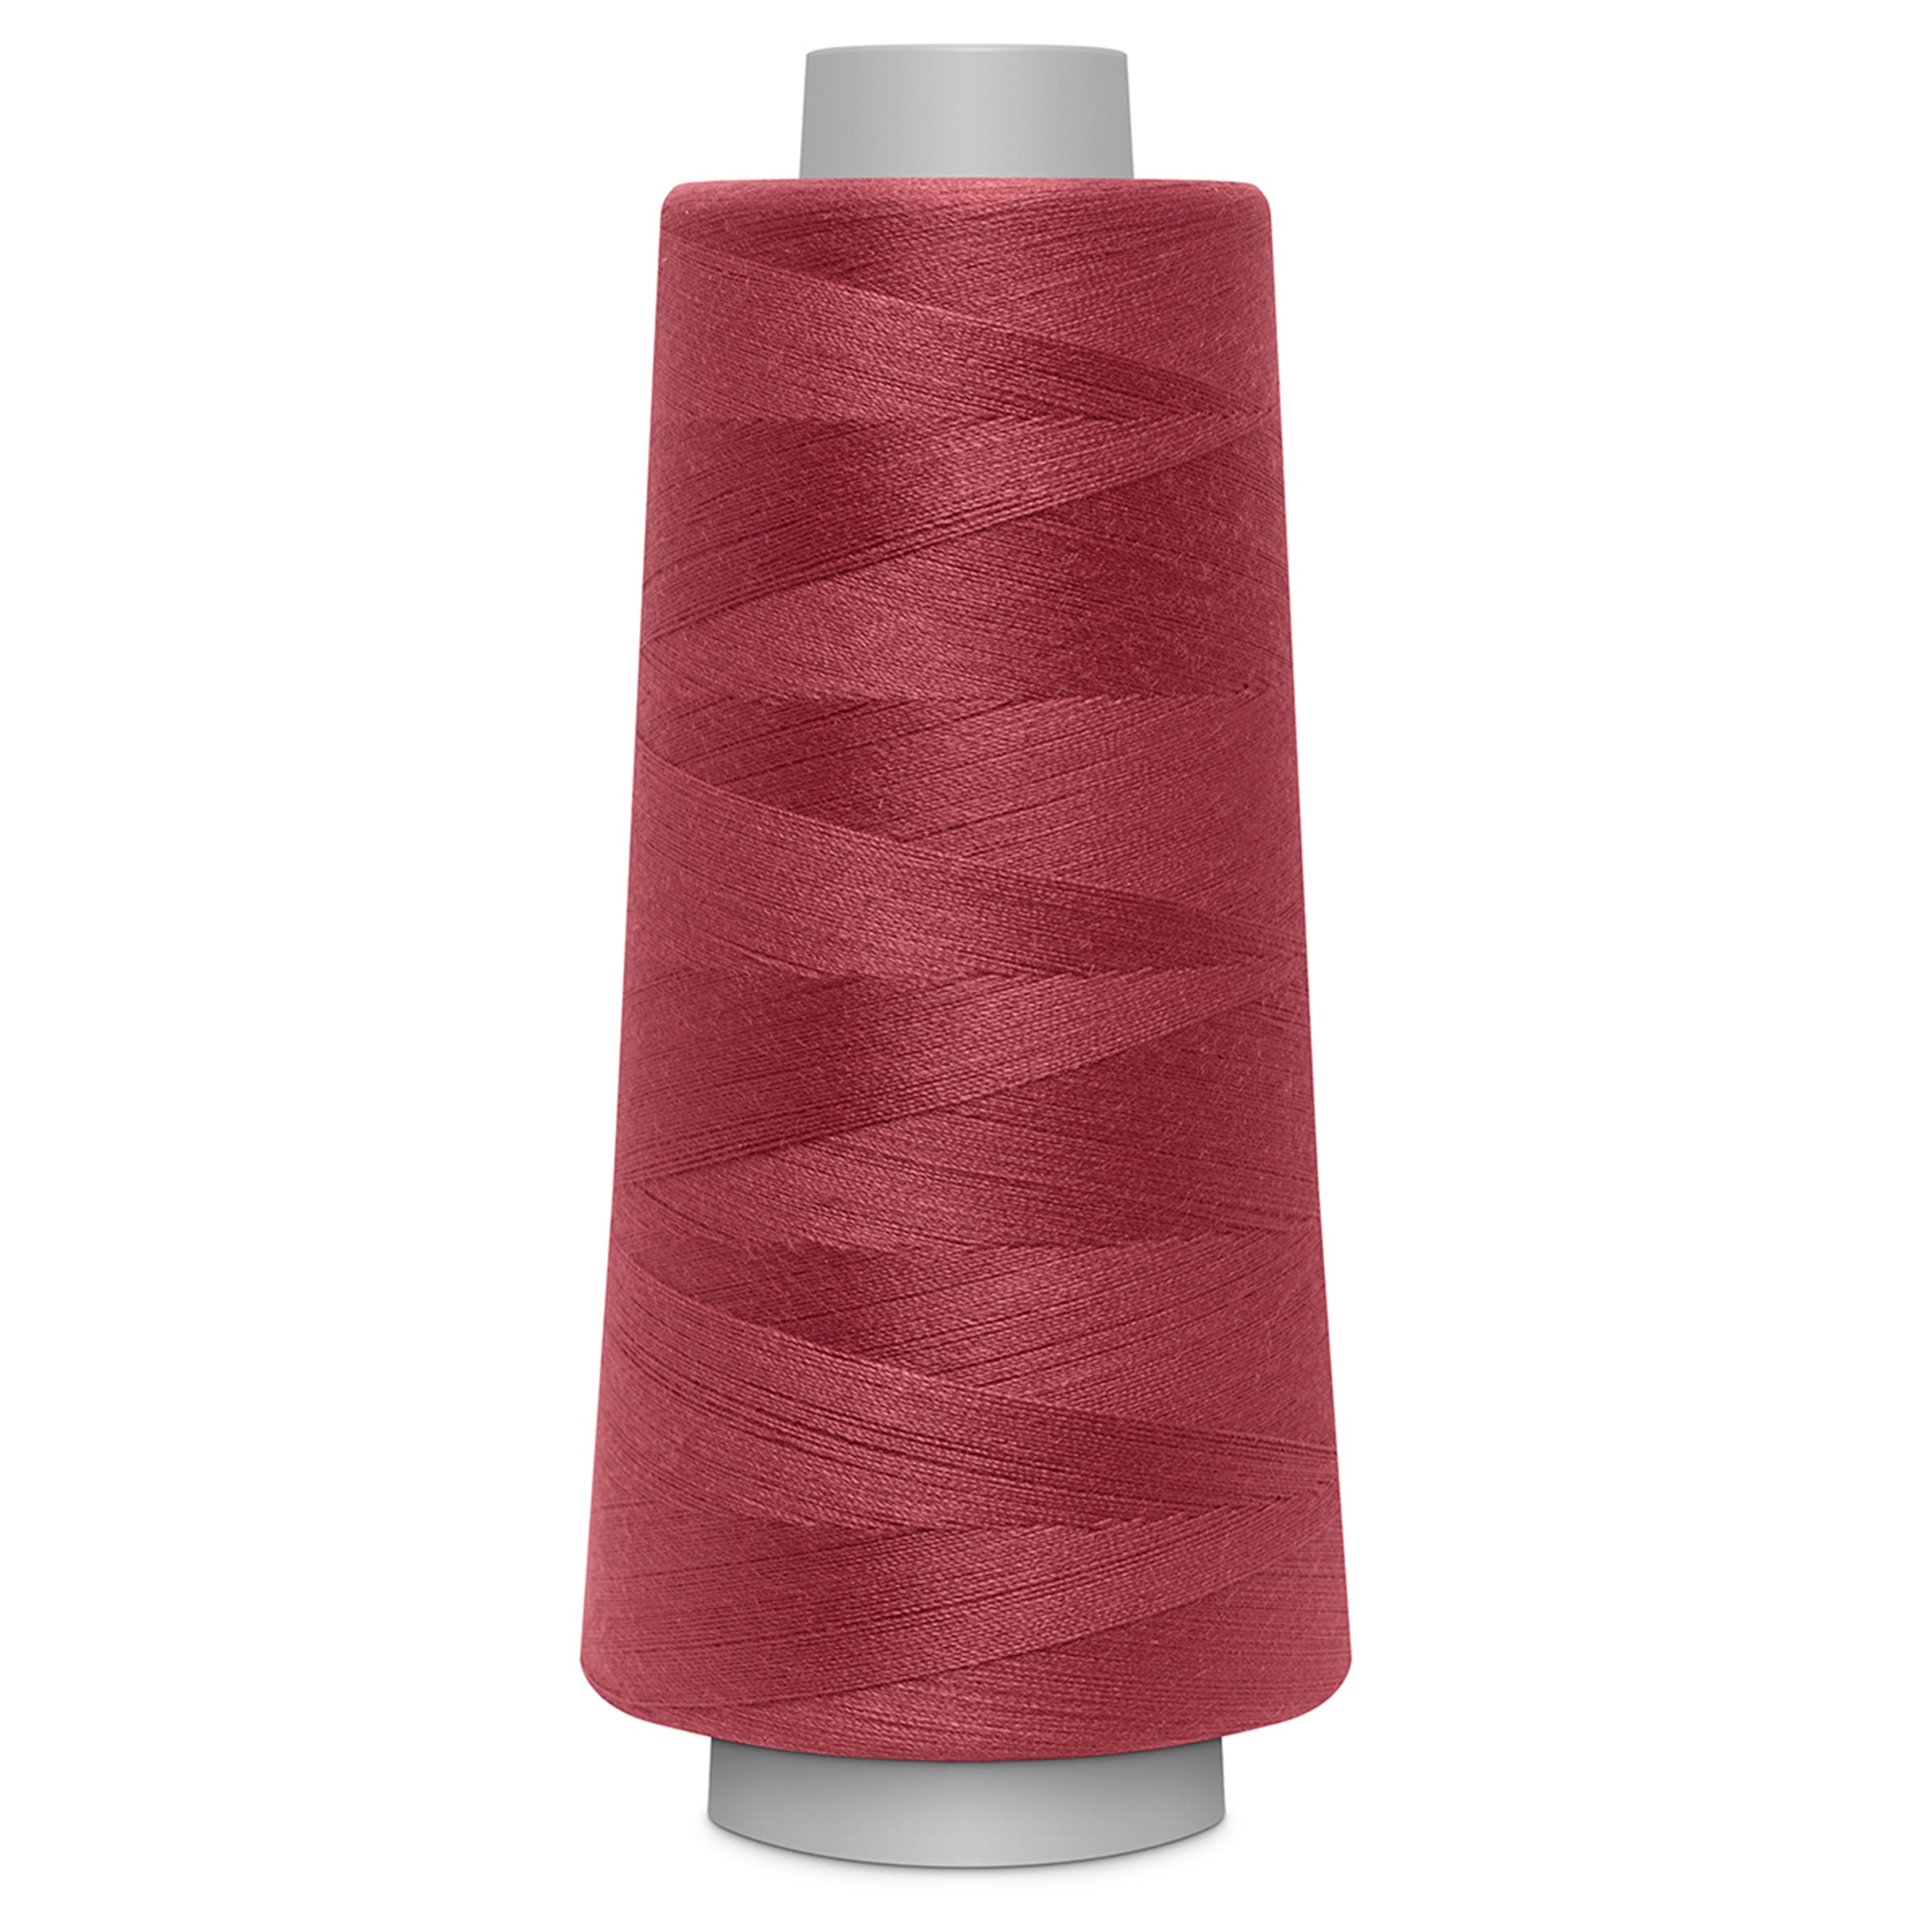 Gutermann TOLDI-LOCK Overlock Thread 2500m | Raspberry from Jaycotts Sewing Supplies